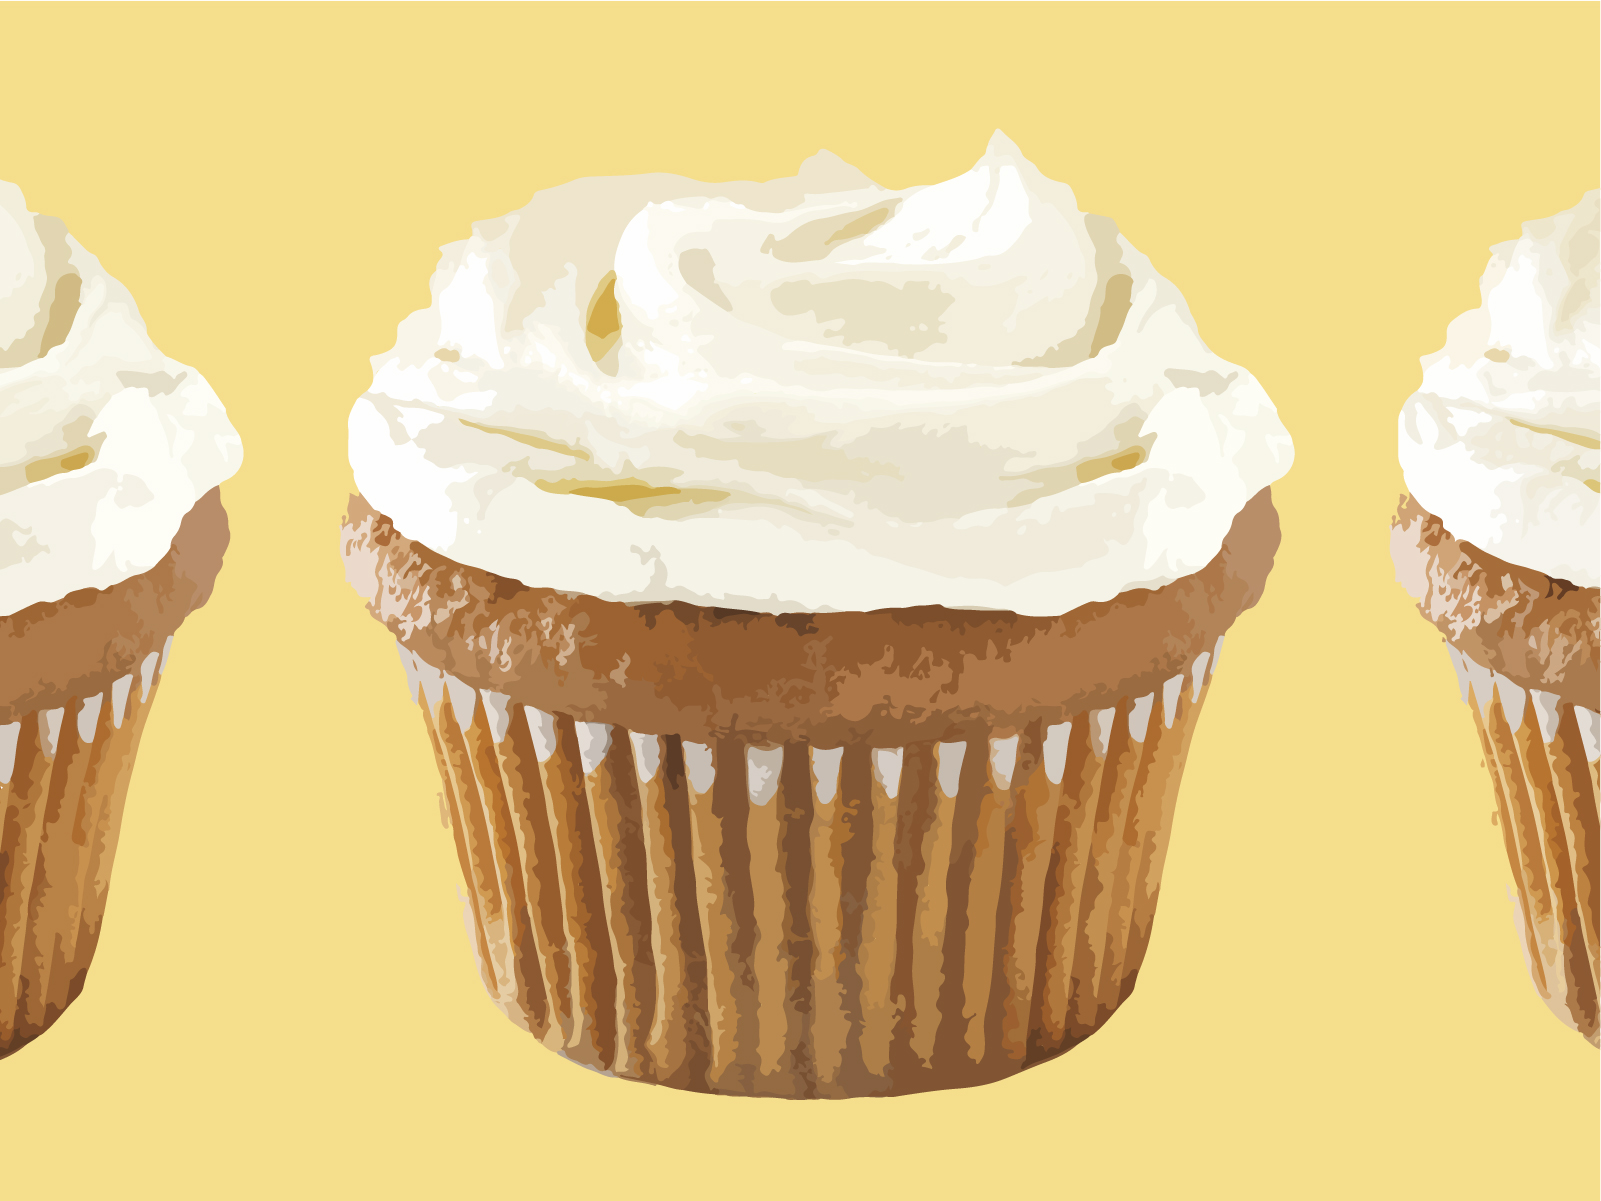 Illustration of Vanilla Cupcake with vanilla frosting on yellow background